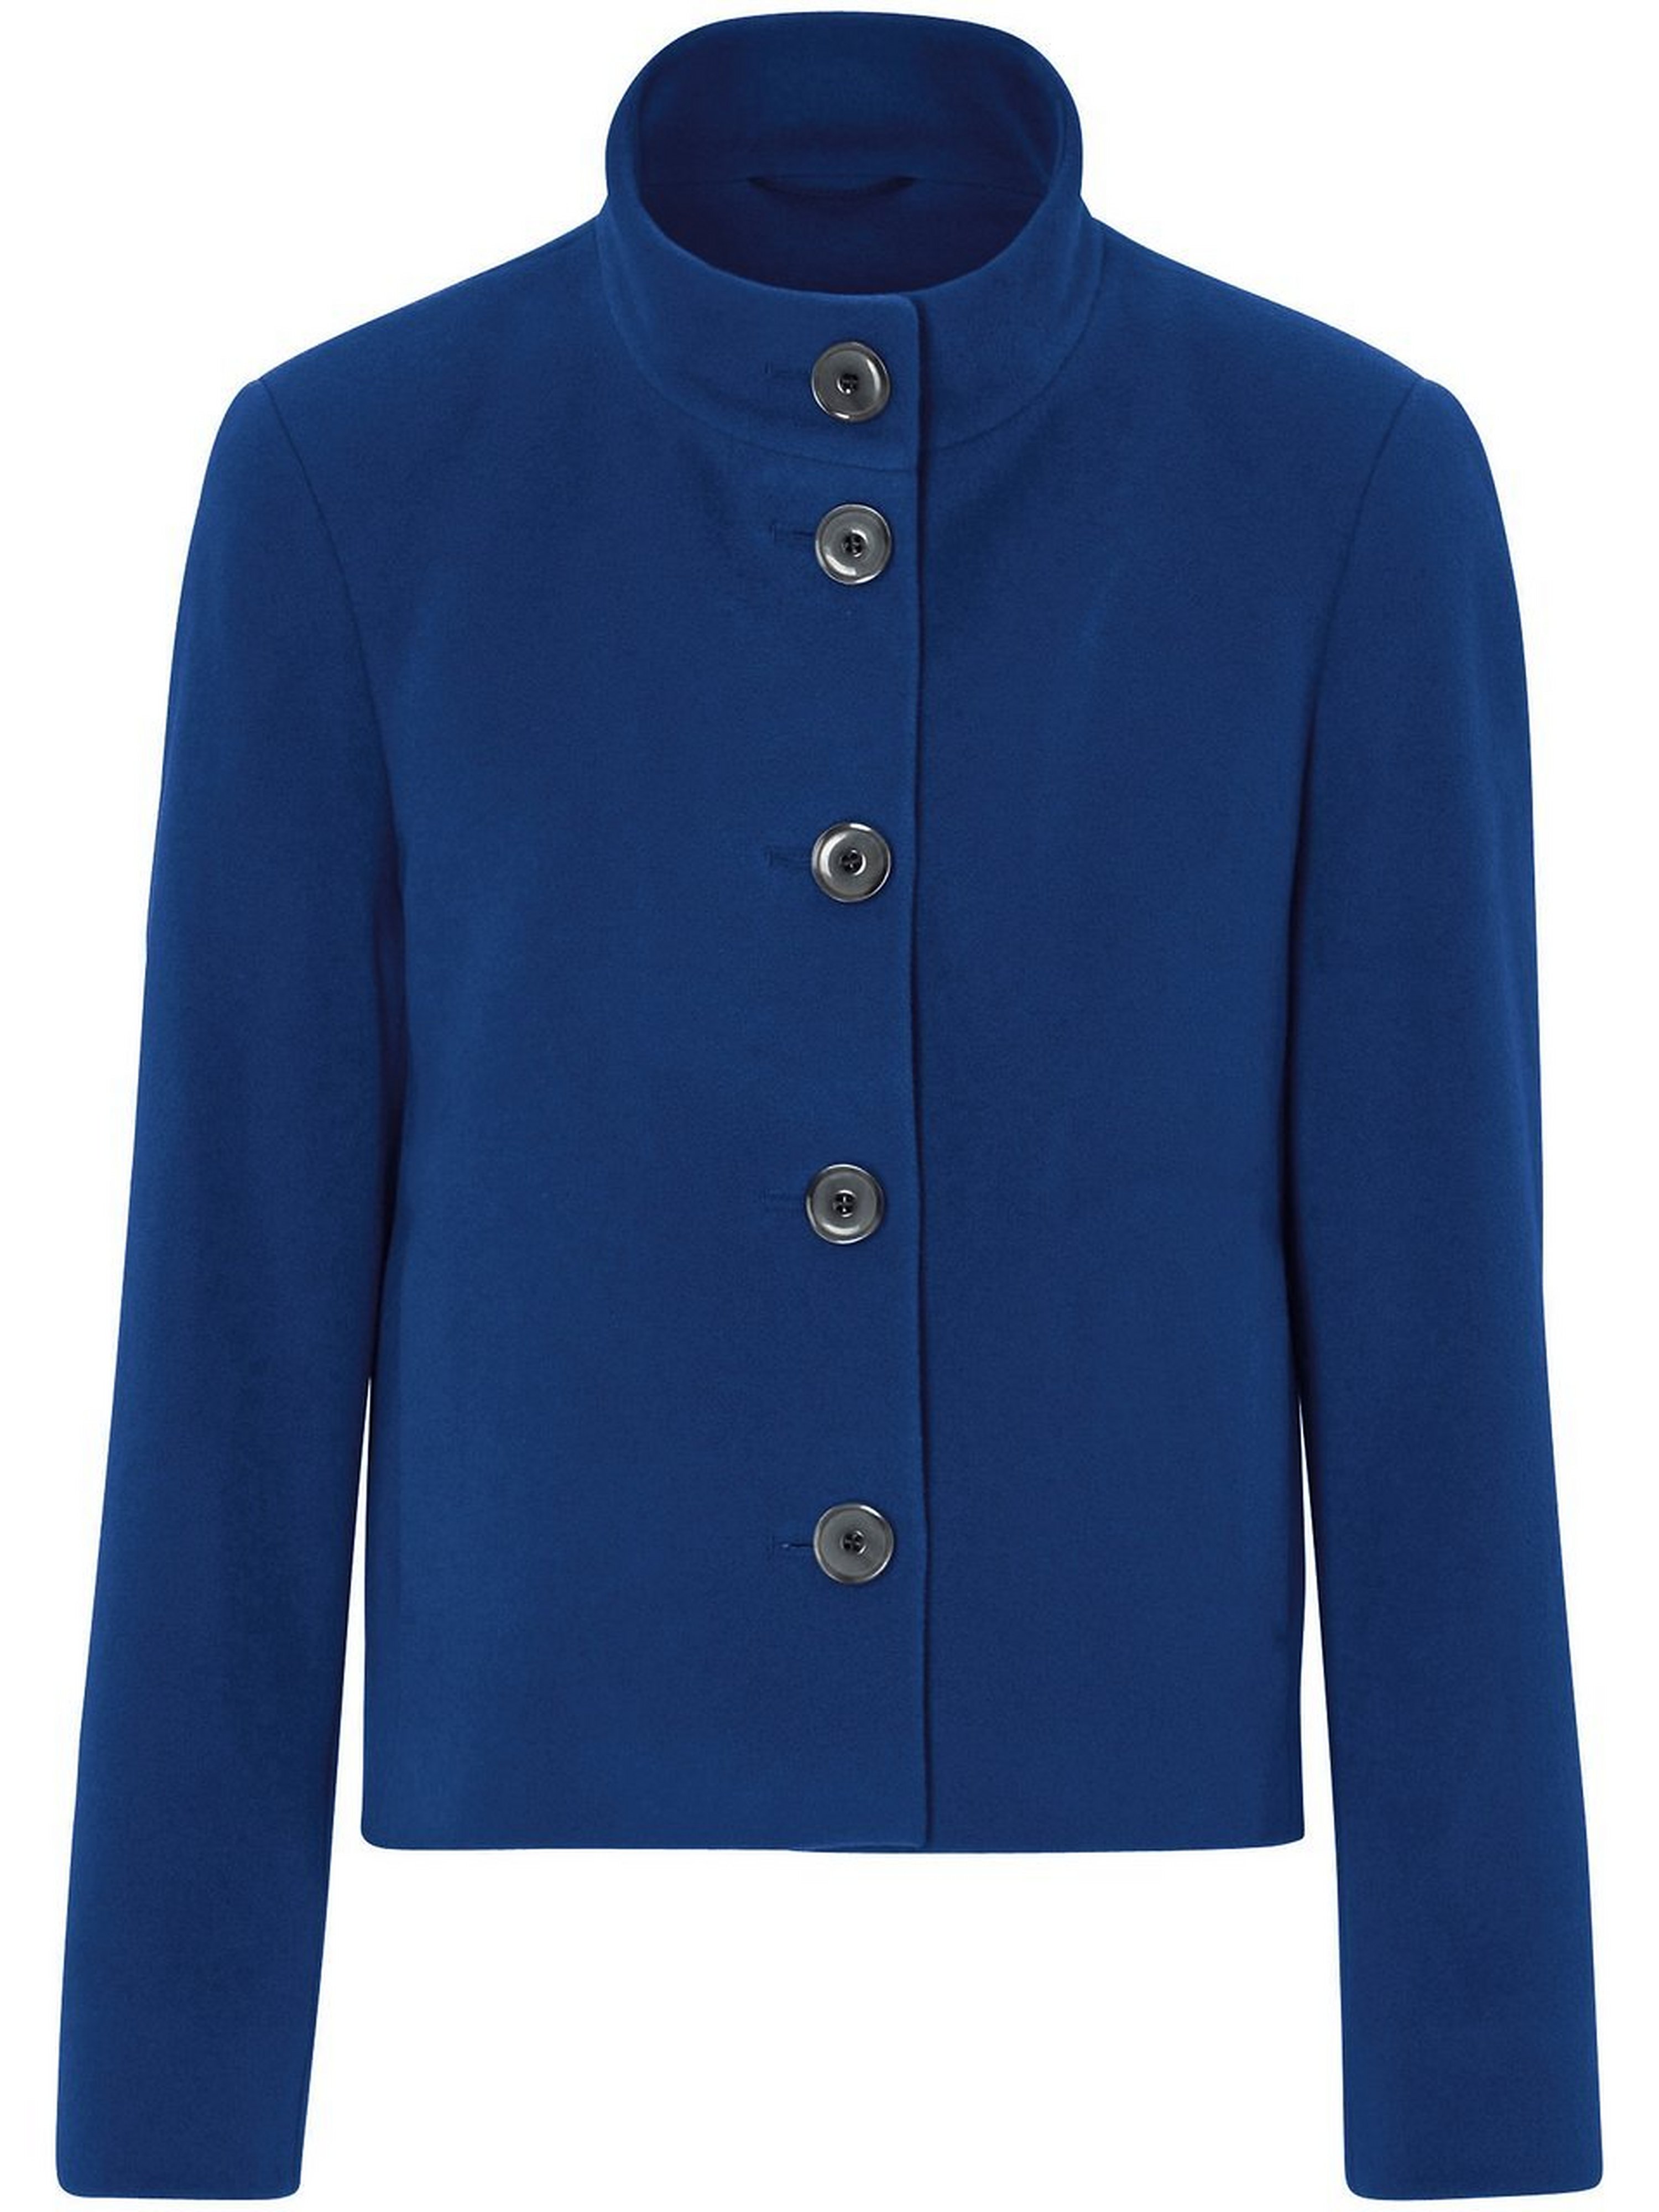 Jacket in slightly shorter length Uta Raasch blue